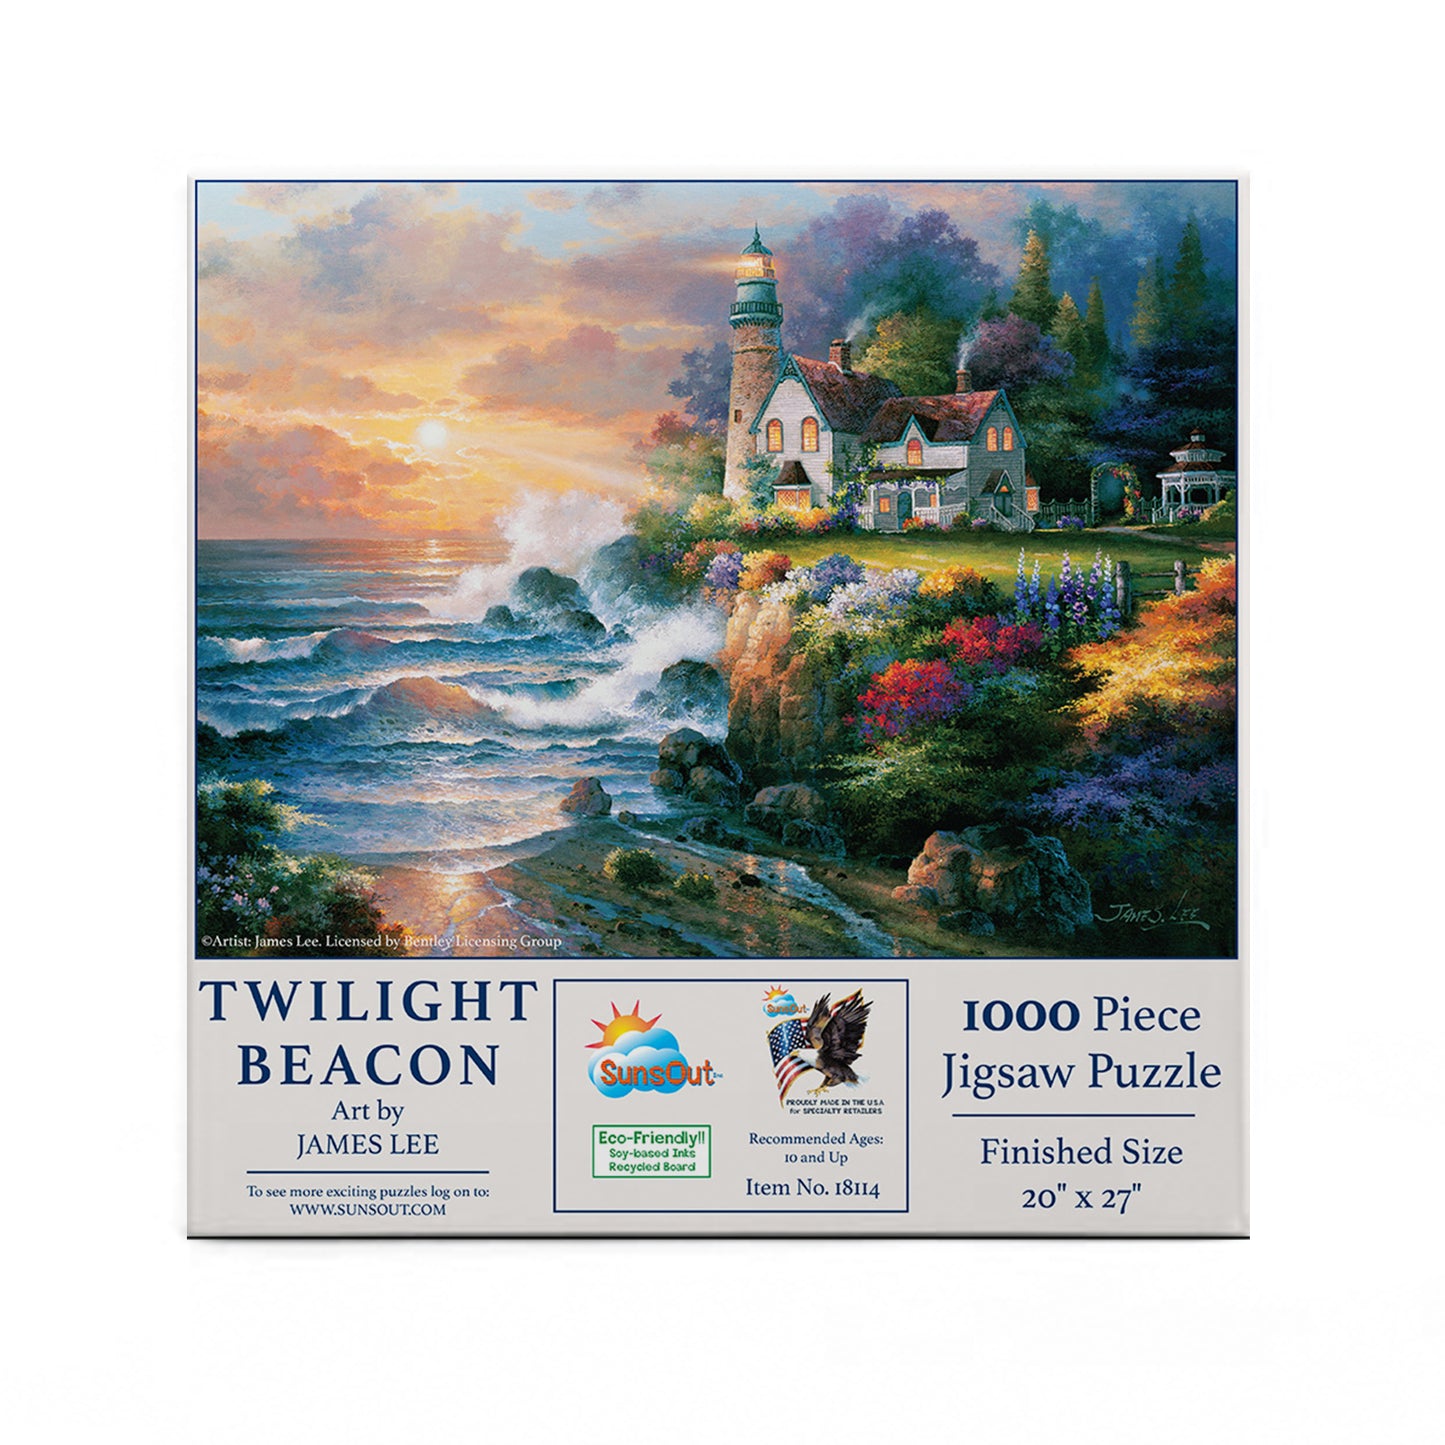 Twilight Beacon - 1000 Piece Jigsaw Puzzle